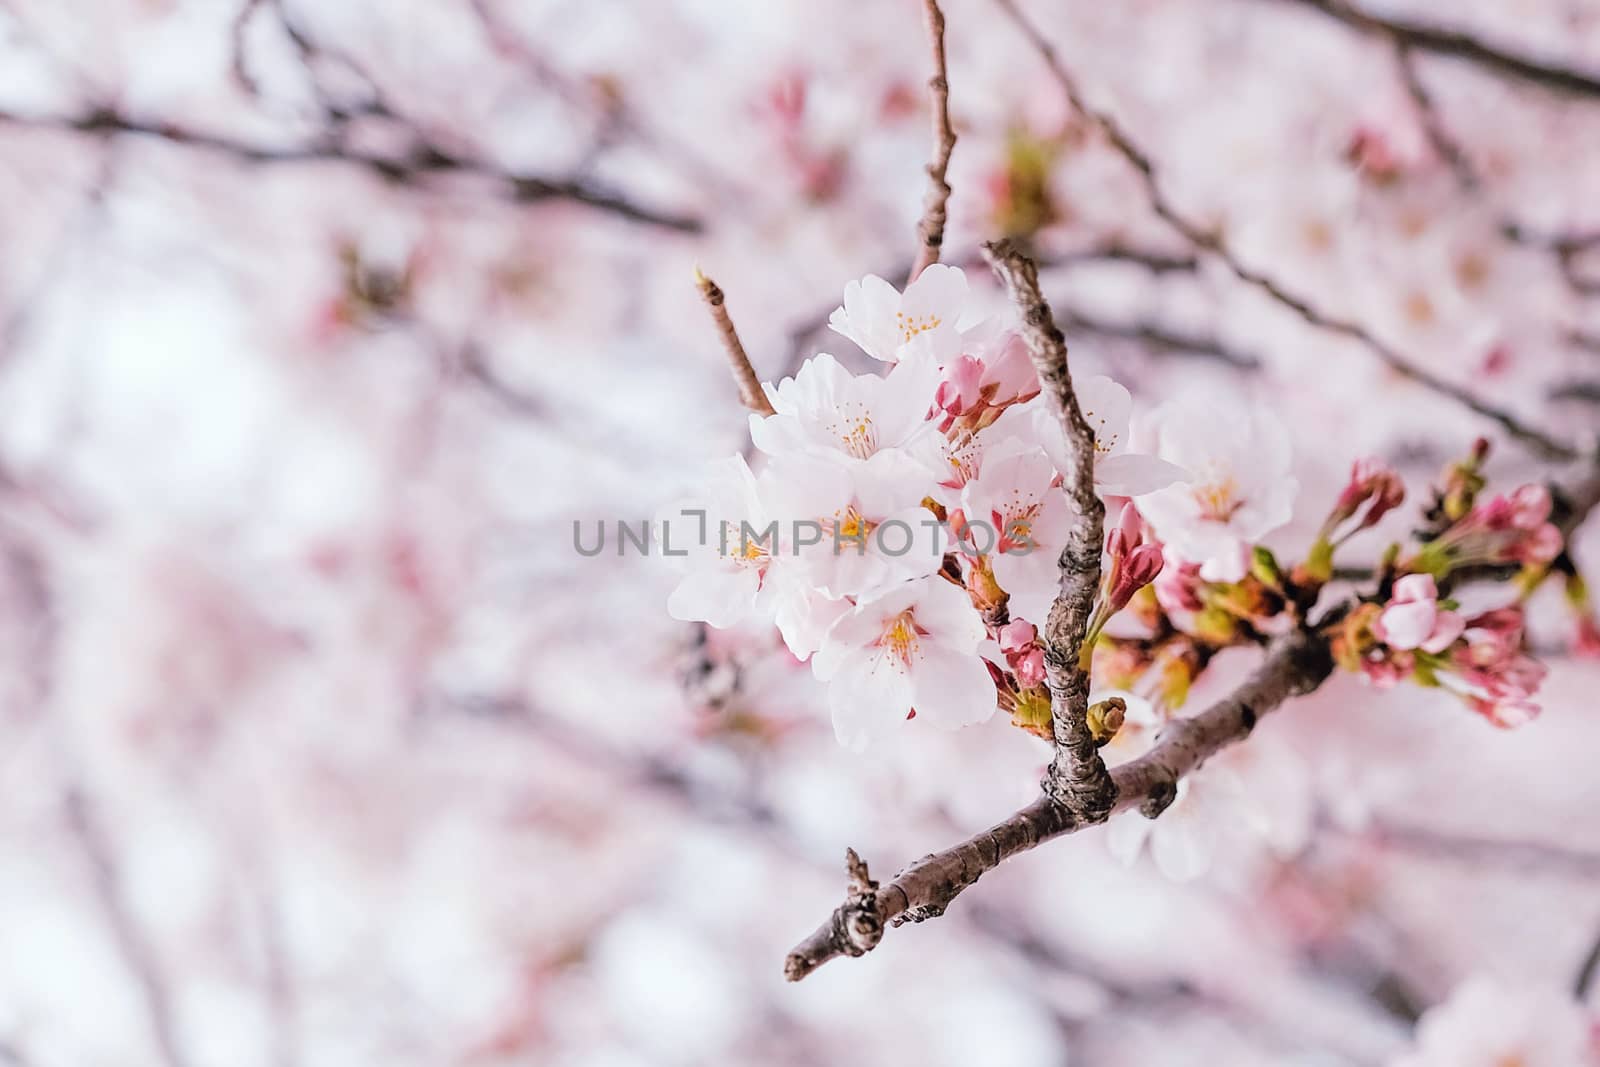 Beautiful blooming cherry blossom [sakura] detail and close up a by Surasak